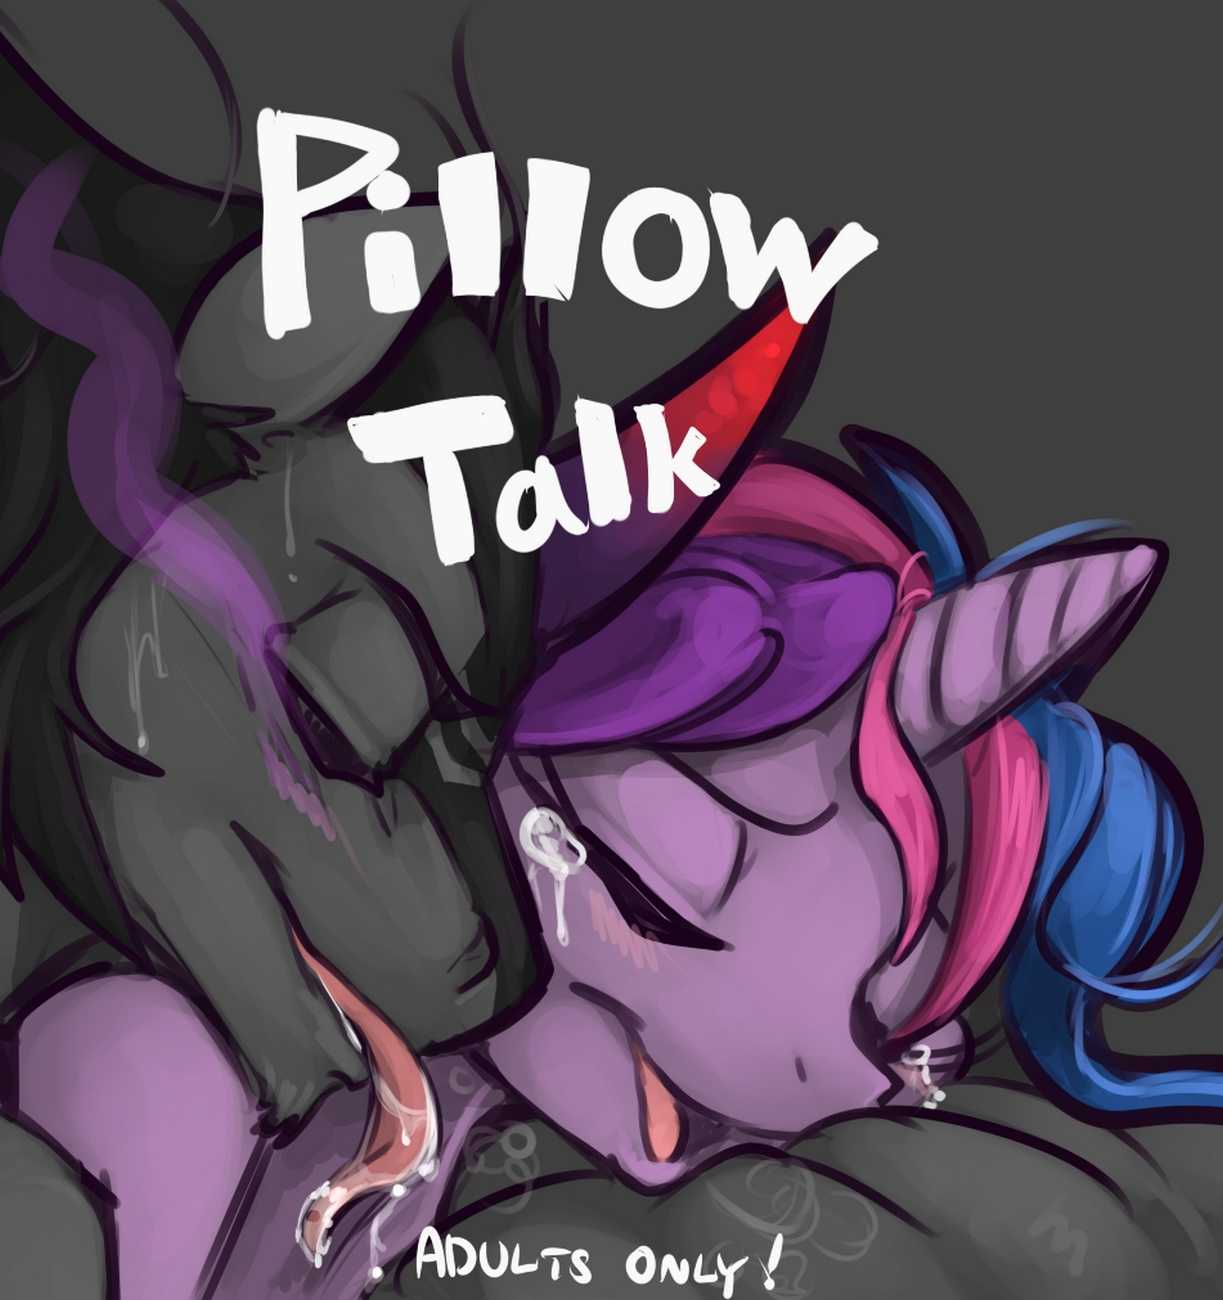 Pillow talk kinky